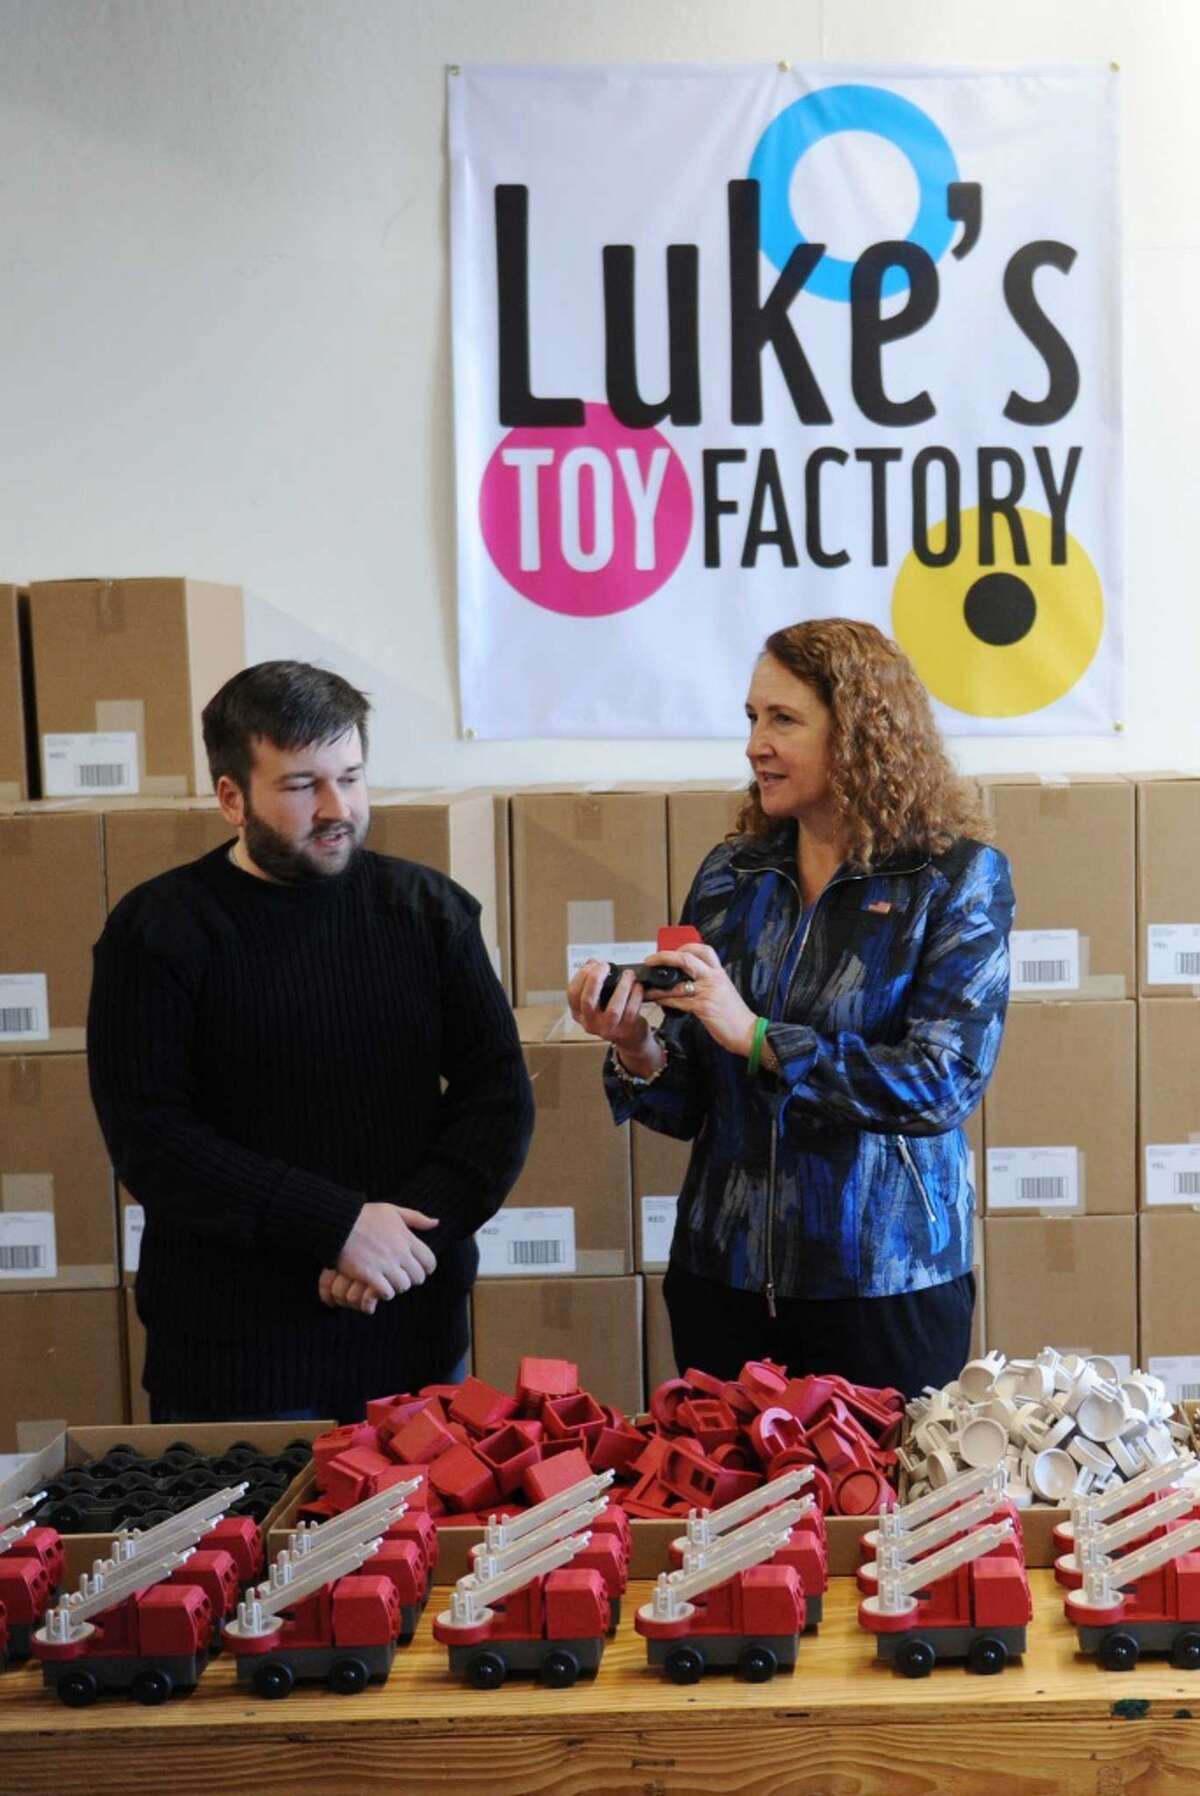 Business: Luke’s Toy Factory Location: Danbury Type: Toy company Source: Connecticut Better Business Bureau